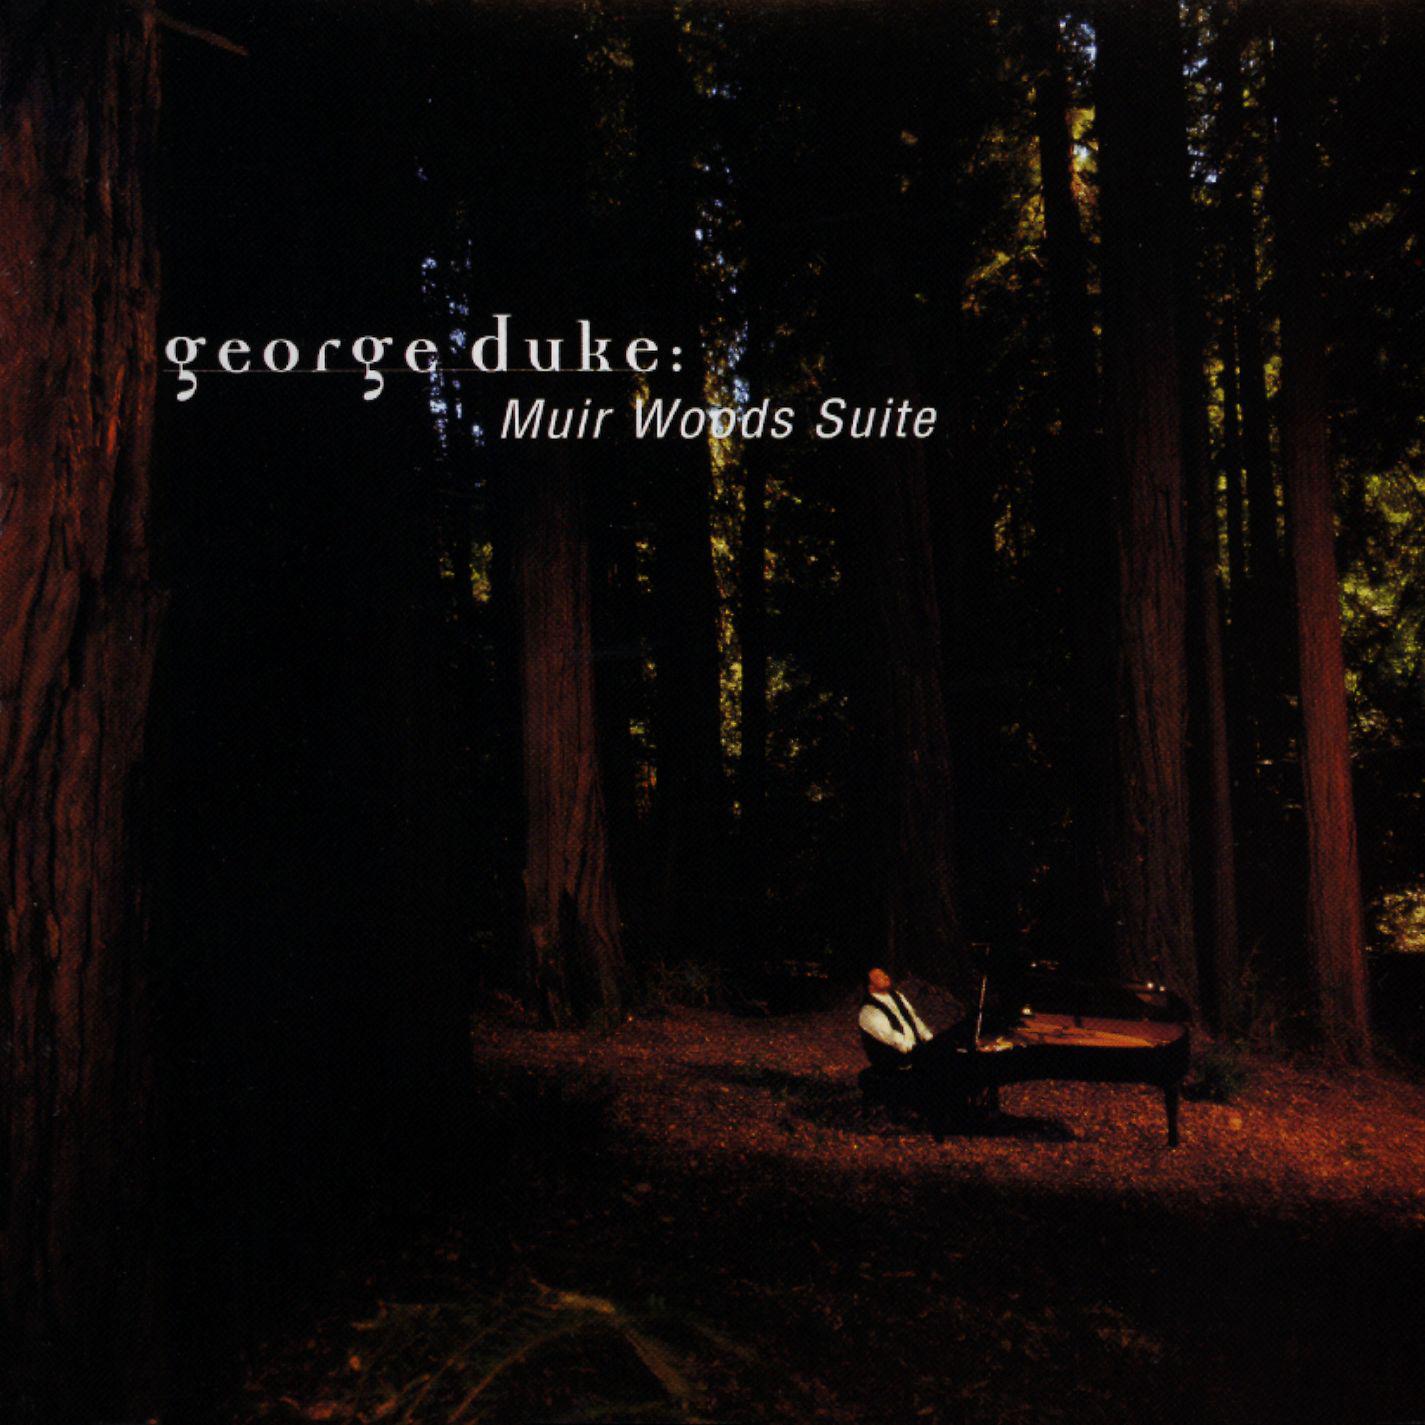 George Duke - Drum Solo